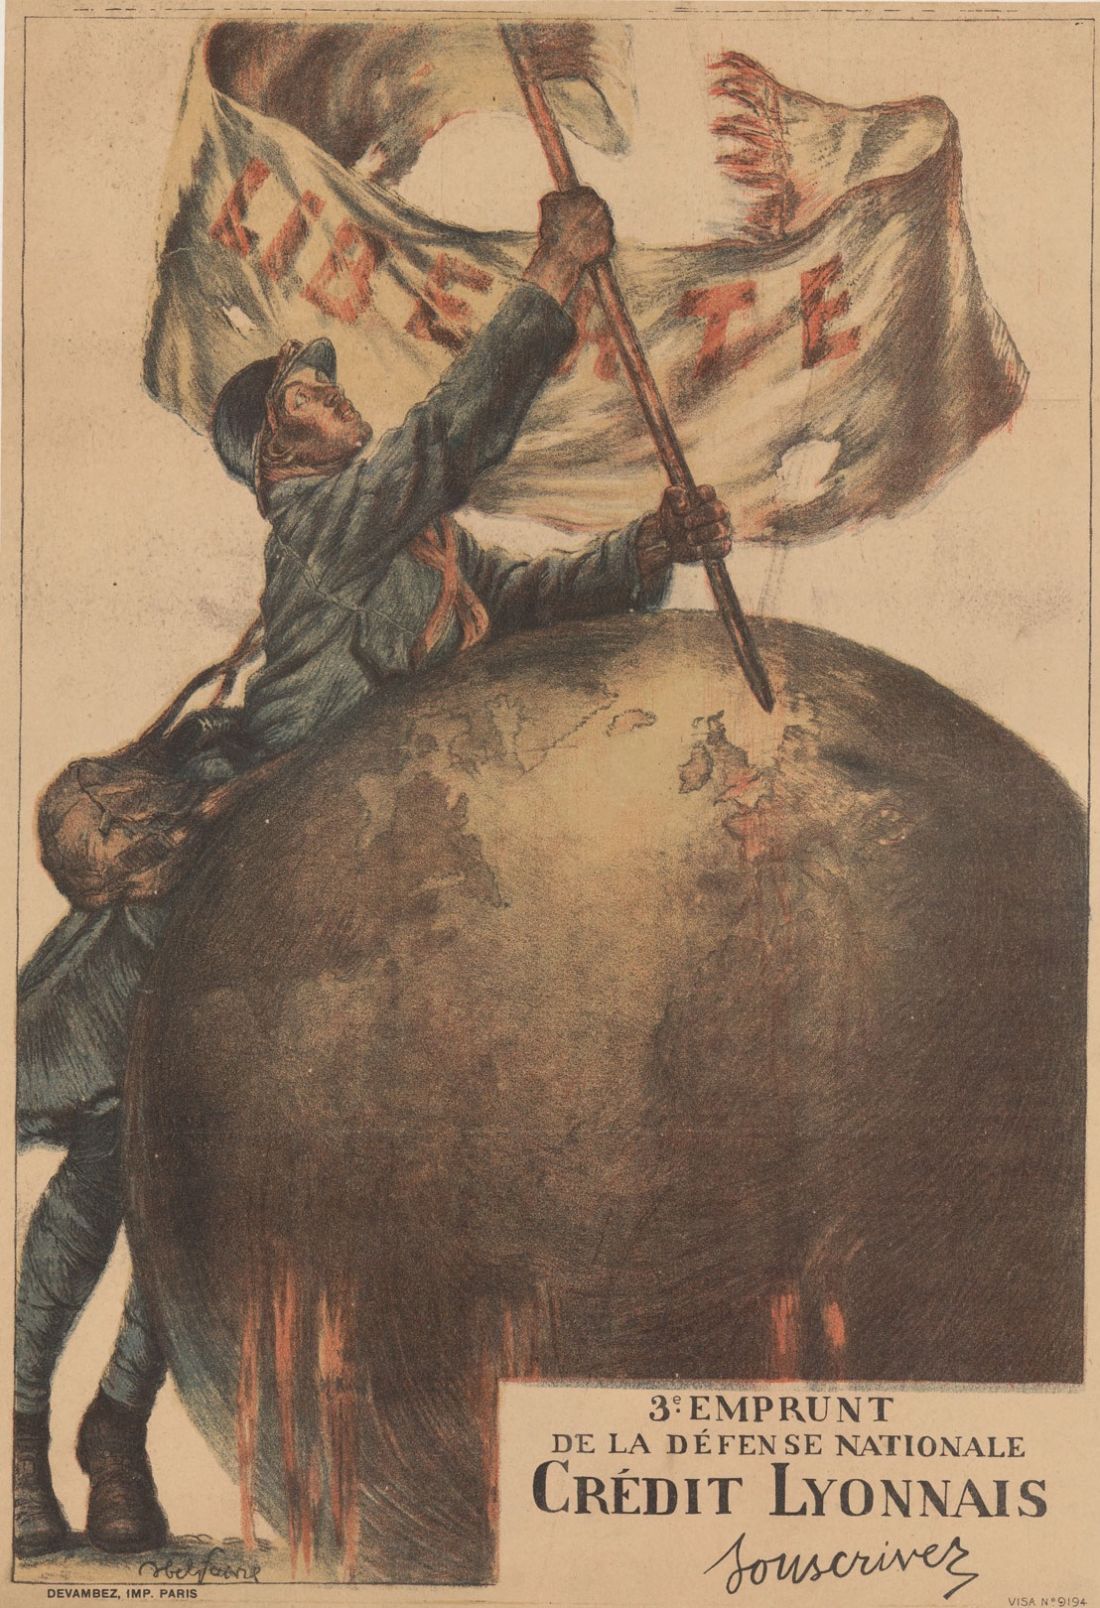 France, Paris, former propaganda poster of the Second World War